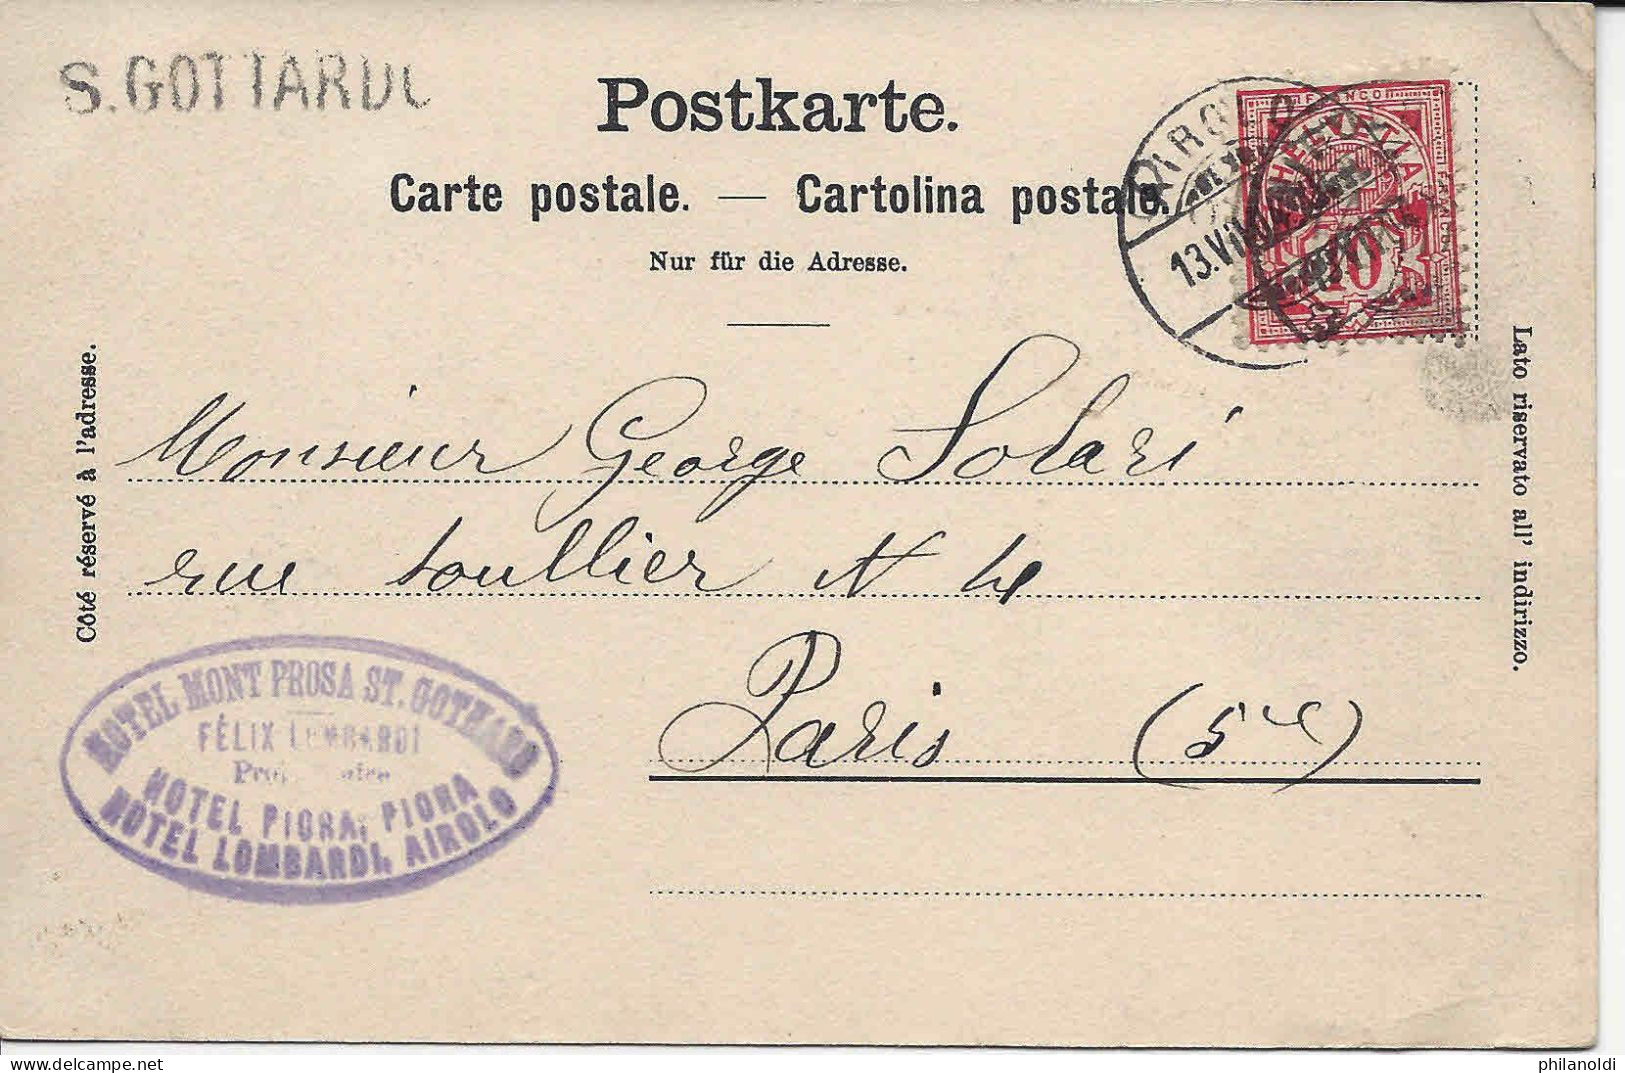 1904 S. GOTTARDO + Airolo Ticino, Cachet Linéaire, Carte Saint Gotthard, Gotthardhospiz + Cachet Privé HOTEL MONT PROSA - Poststempel